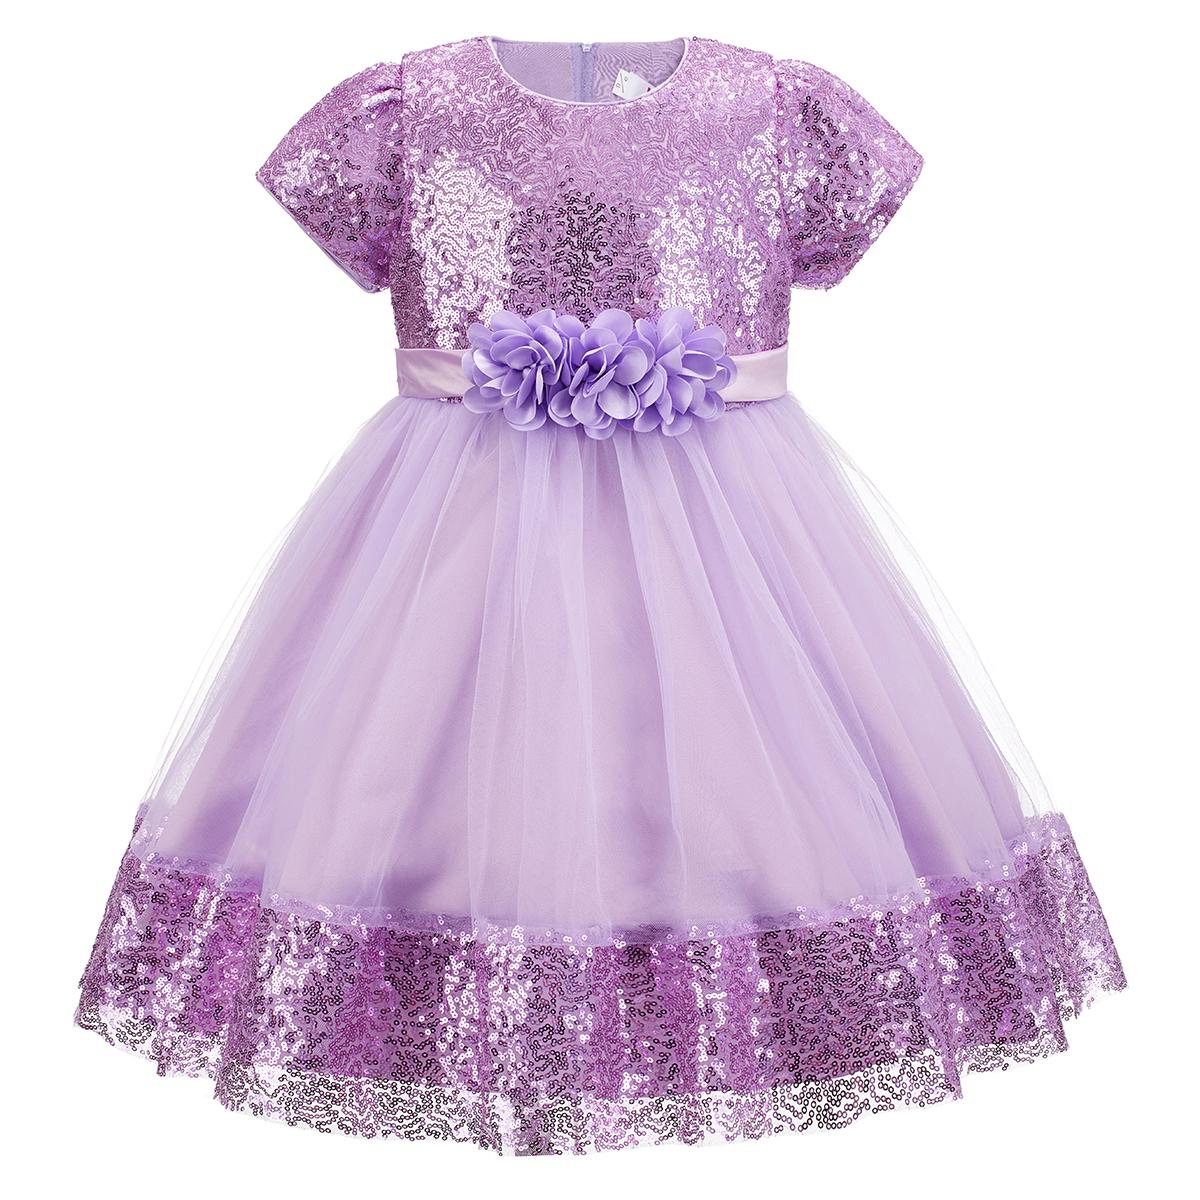 Lilac Glitter Overlay Dress